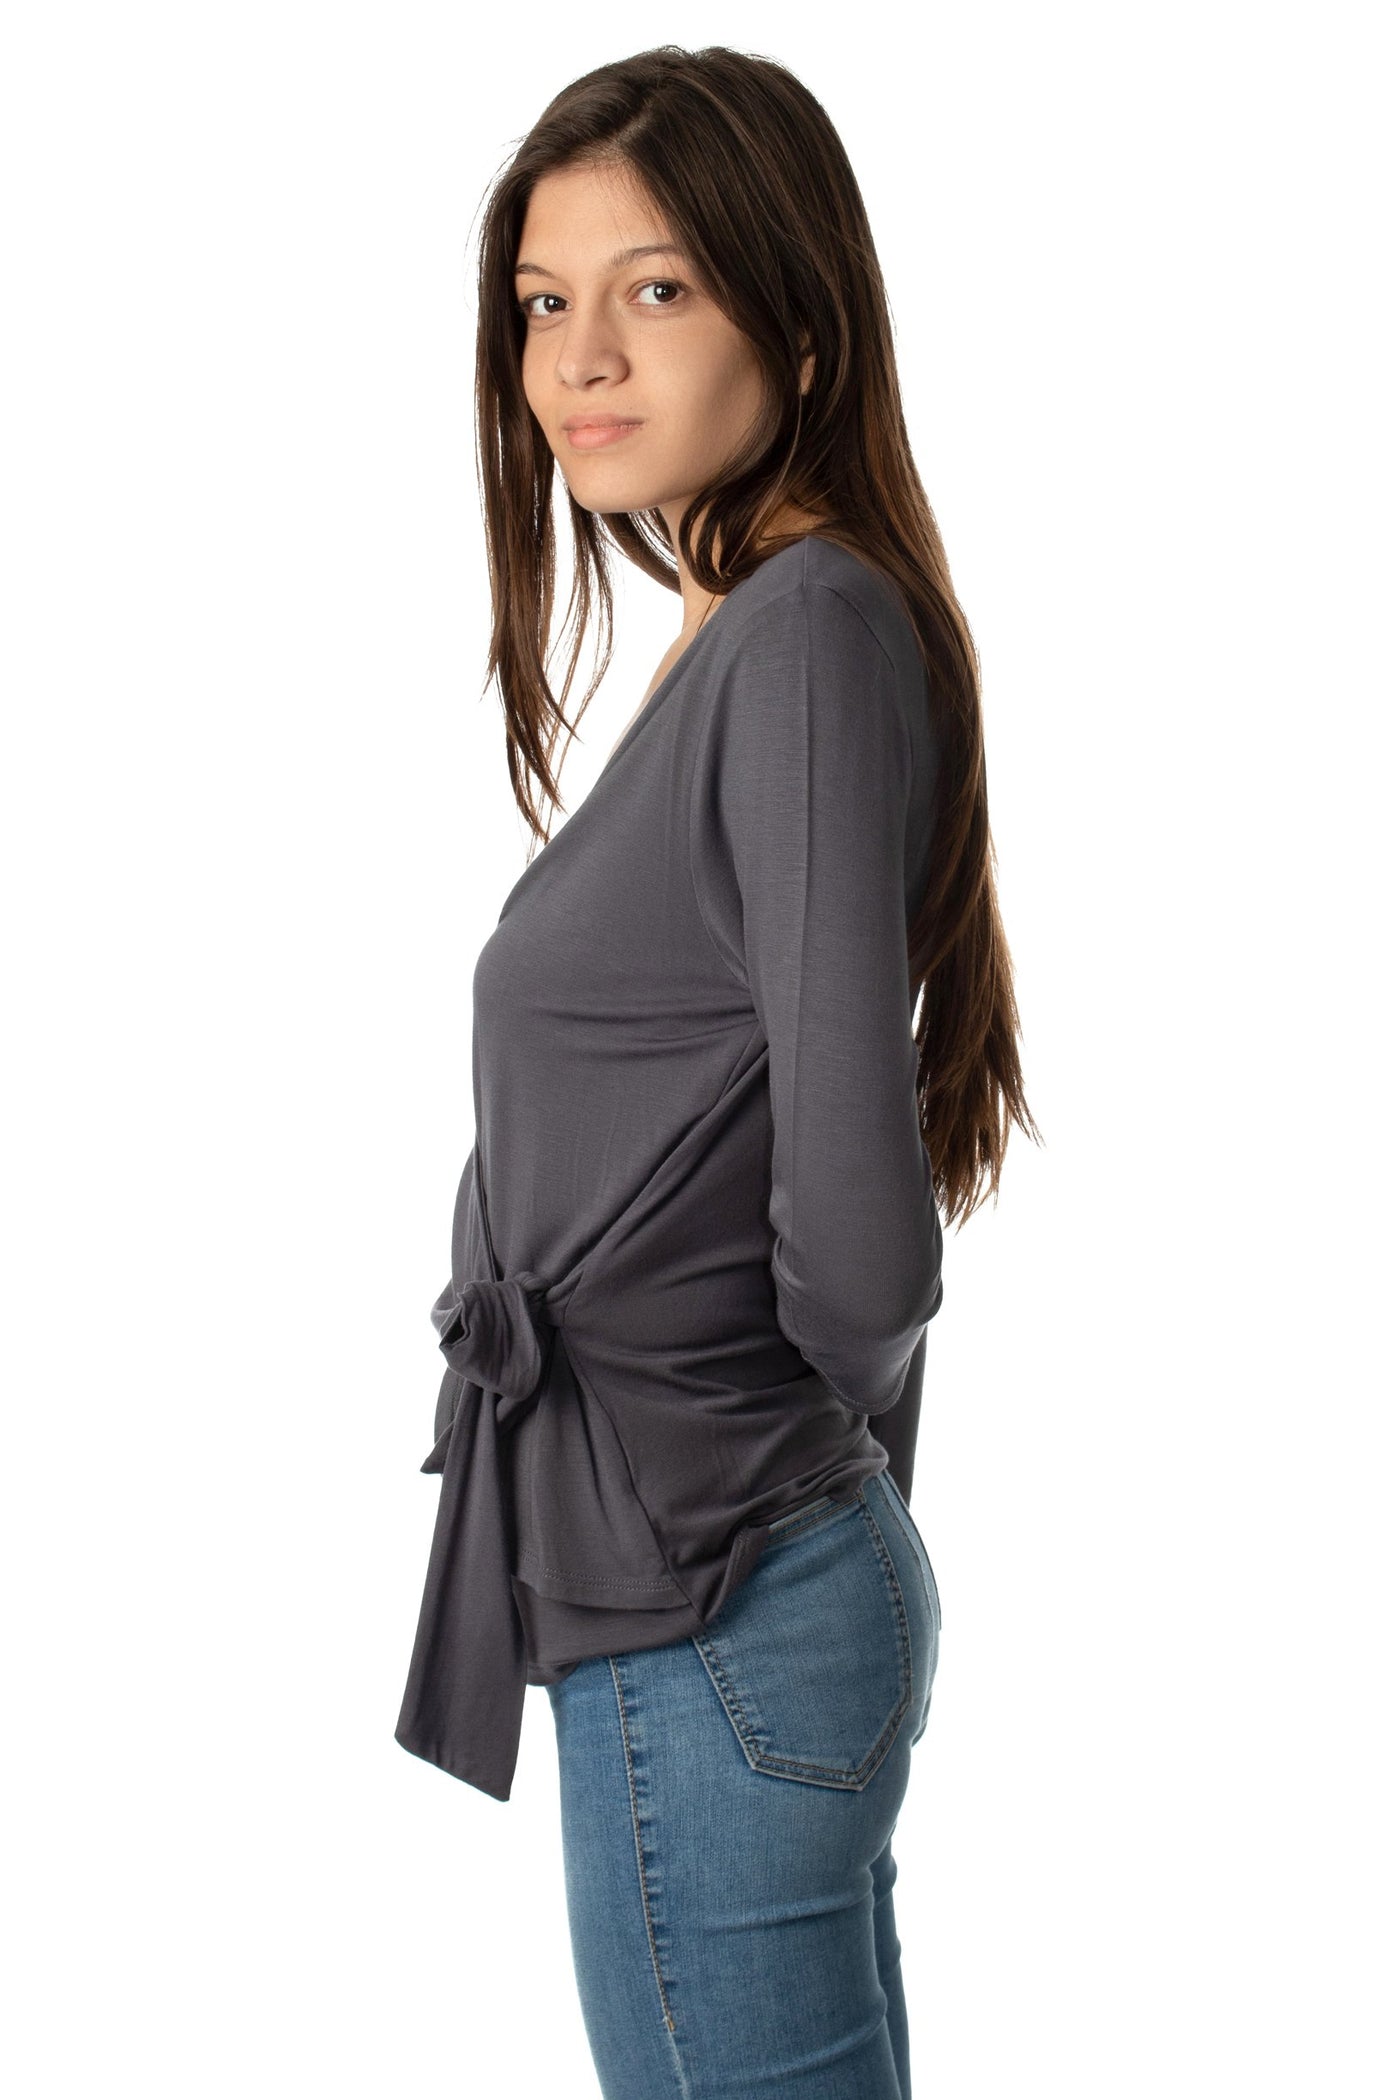 Chassca V-Neck Wrap Design 3/4 Sleeve Blouse